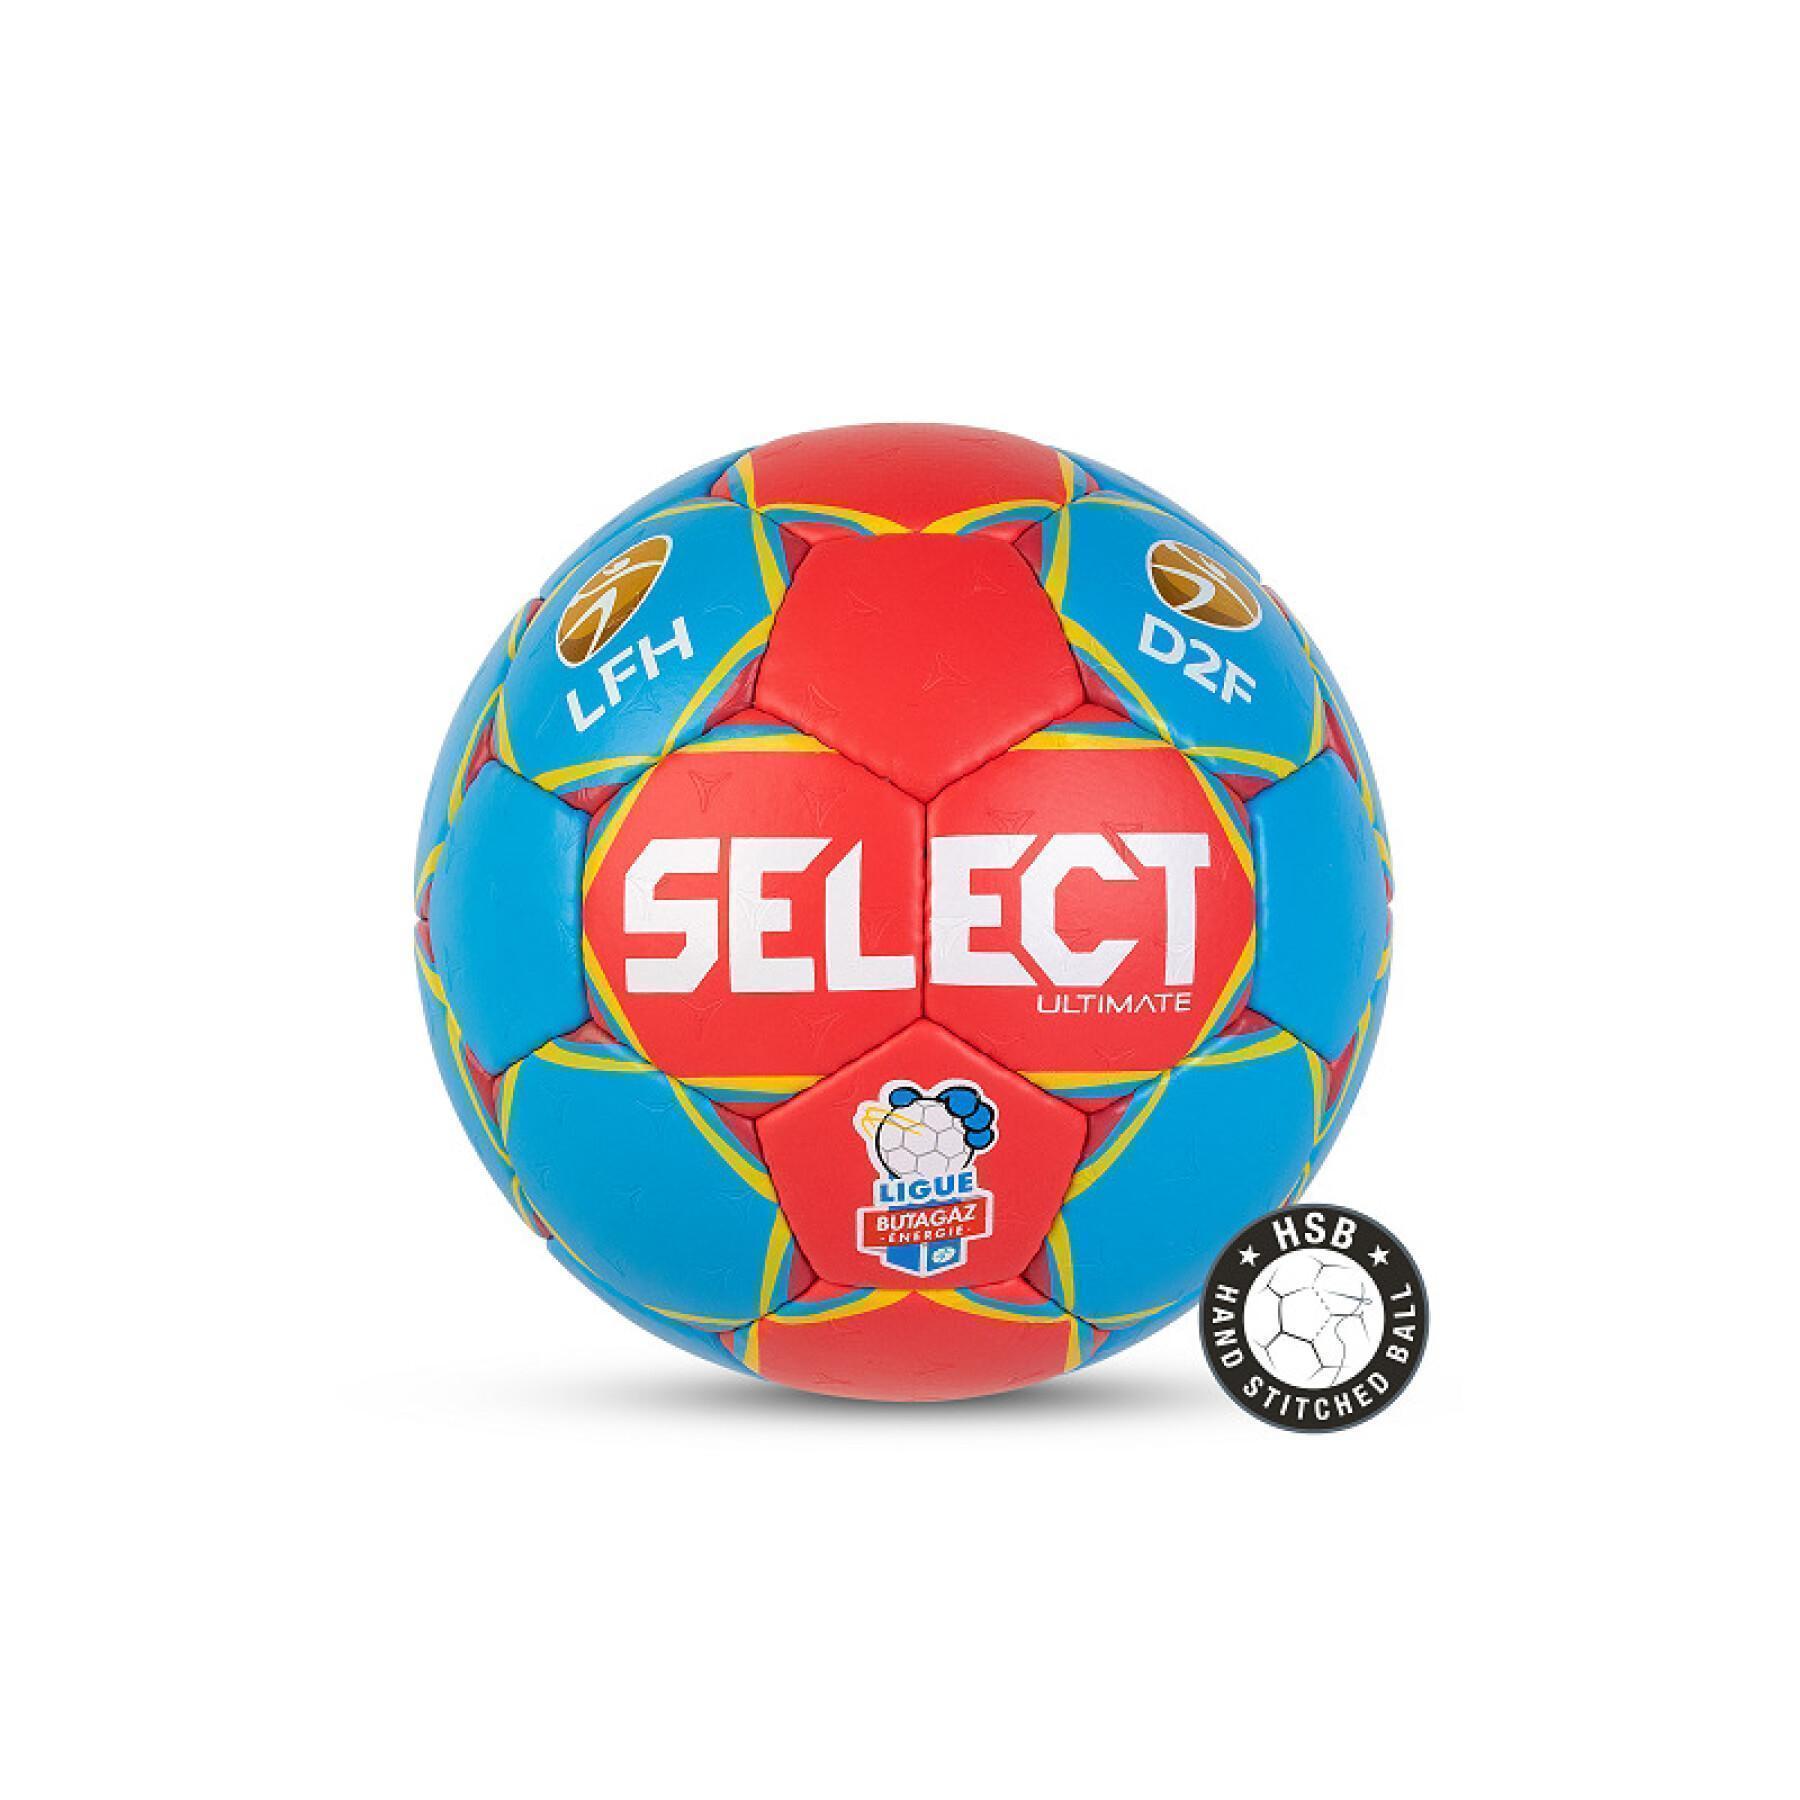 Ballon Select Ultimate LFH Officiel 2020/21